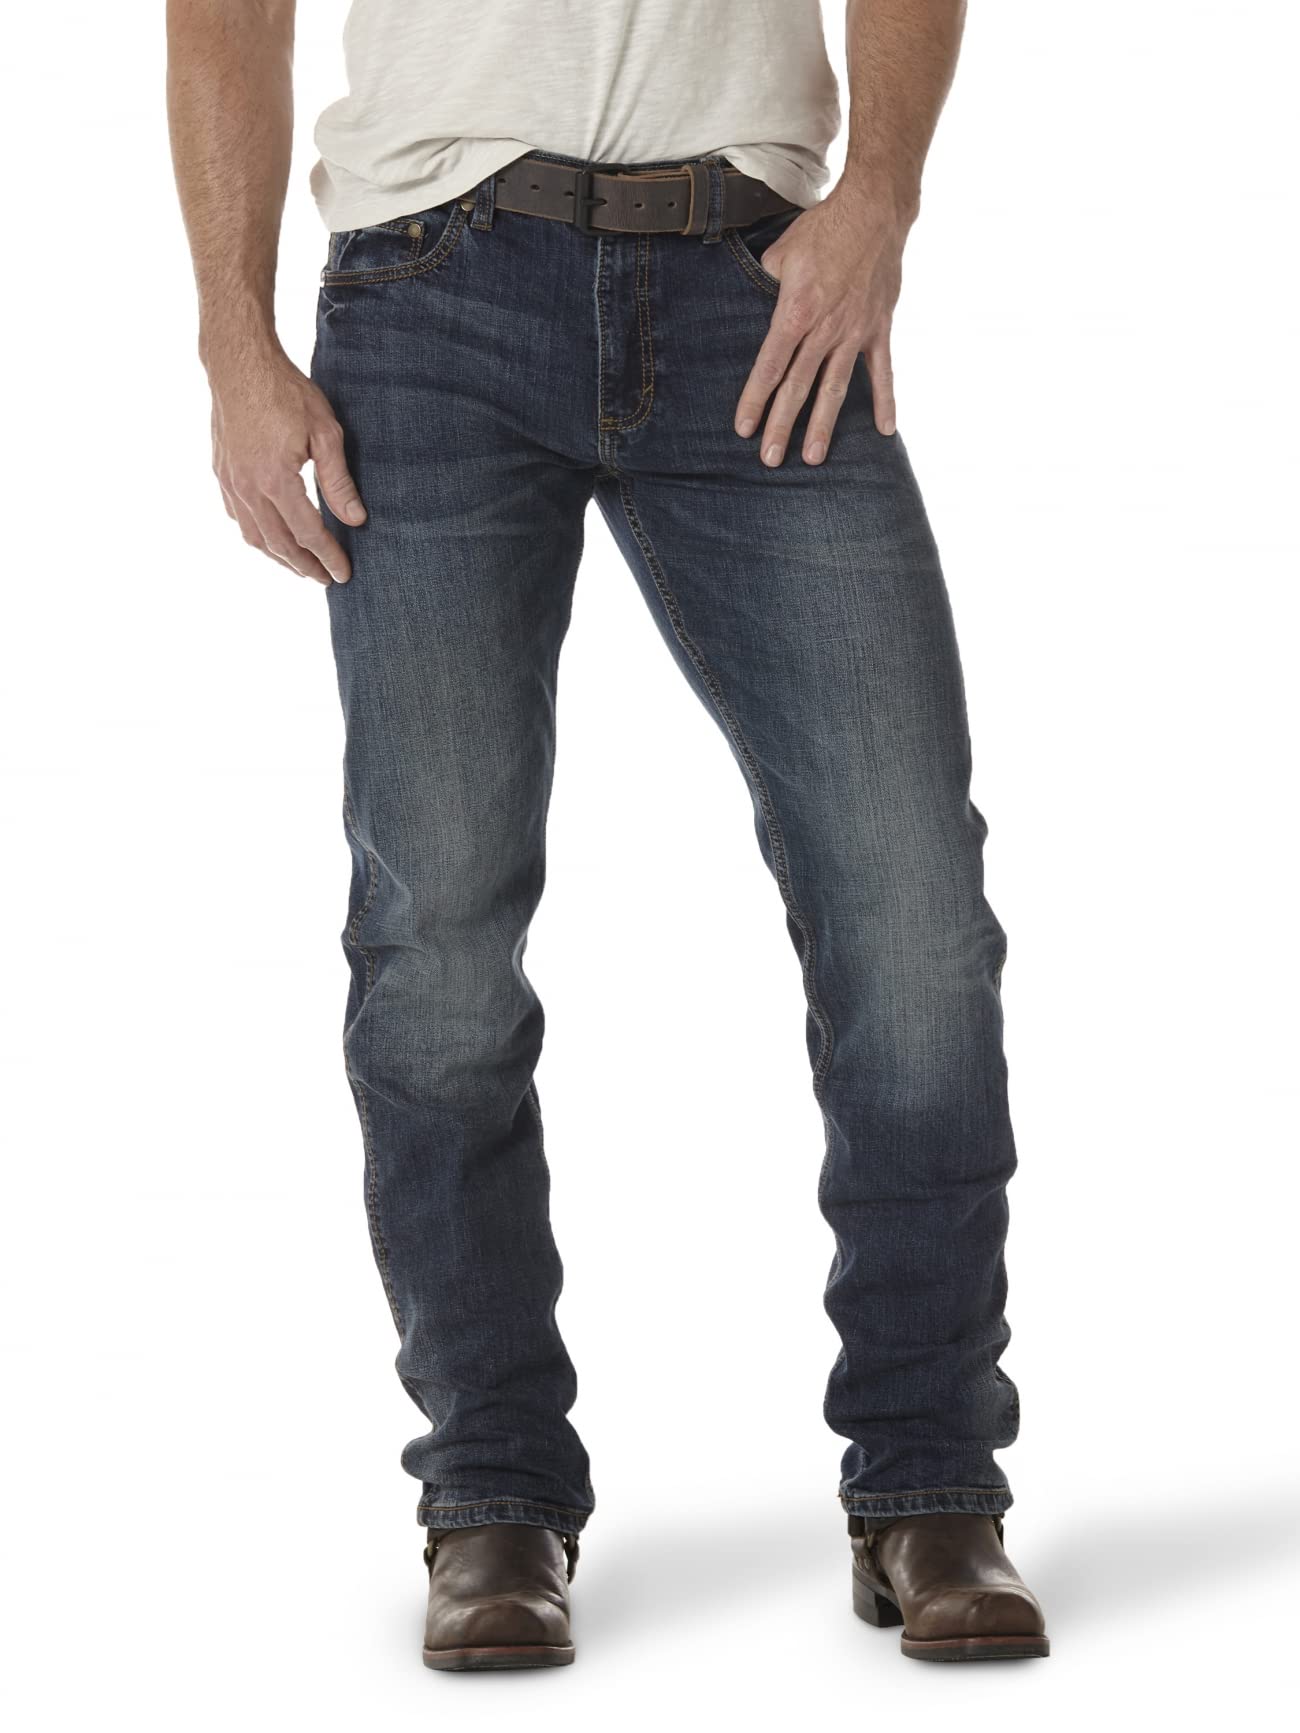 Wrangler Men's Retro Slim Fit Straight Leg Jean